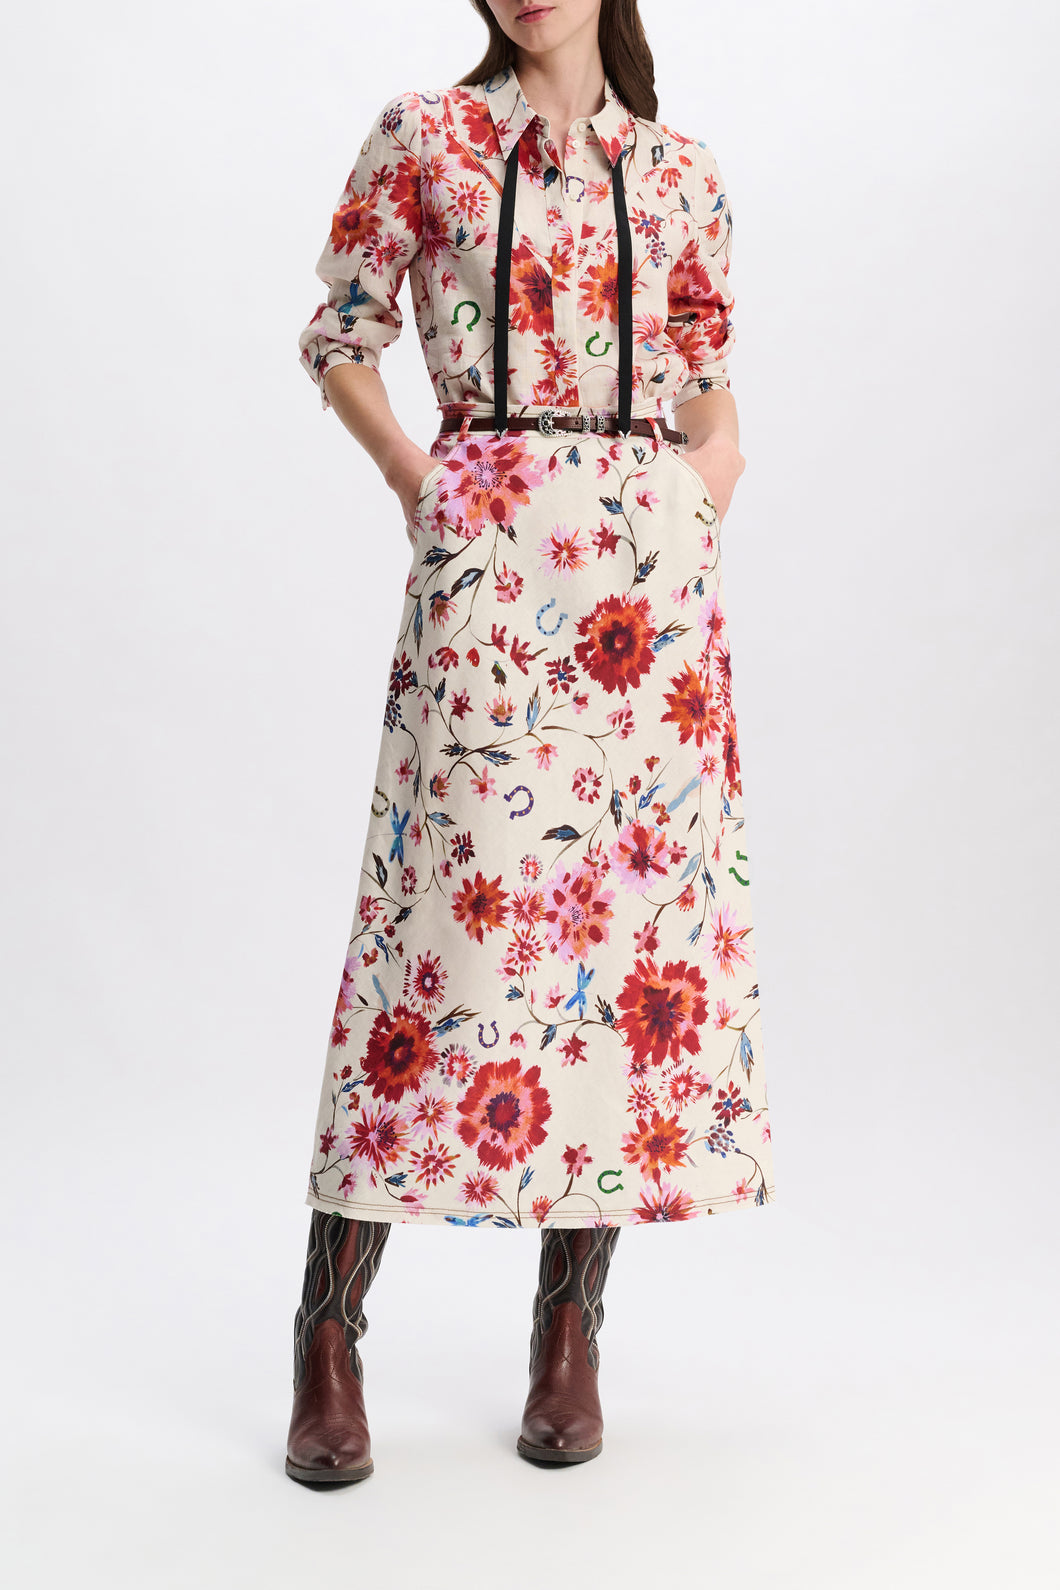 Dorothee Schumacher  Floral Ease Skirt